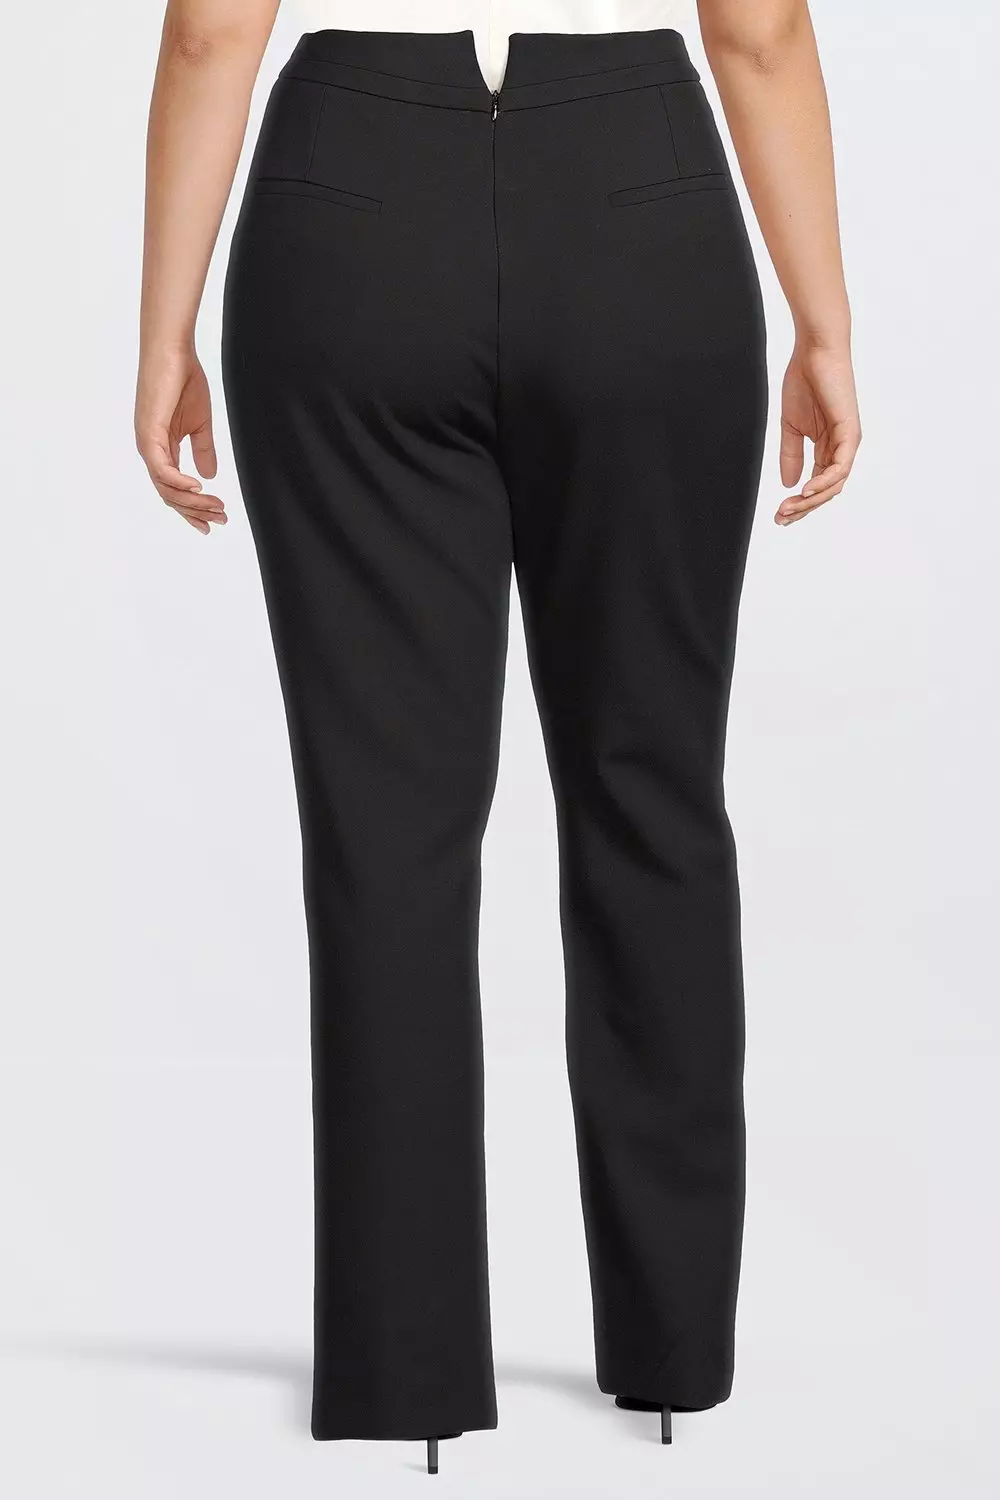 Women's Split-Hem Tailored Slim Straight Pant, Women's Clearance